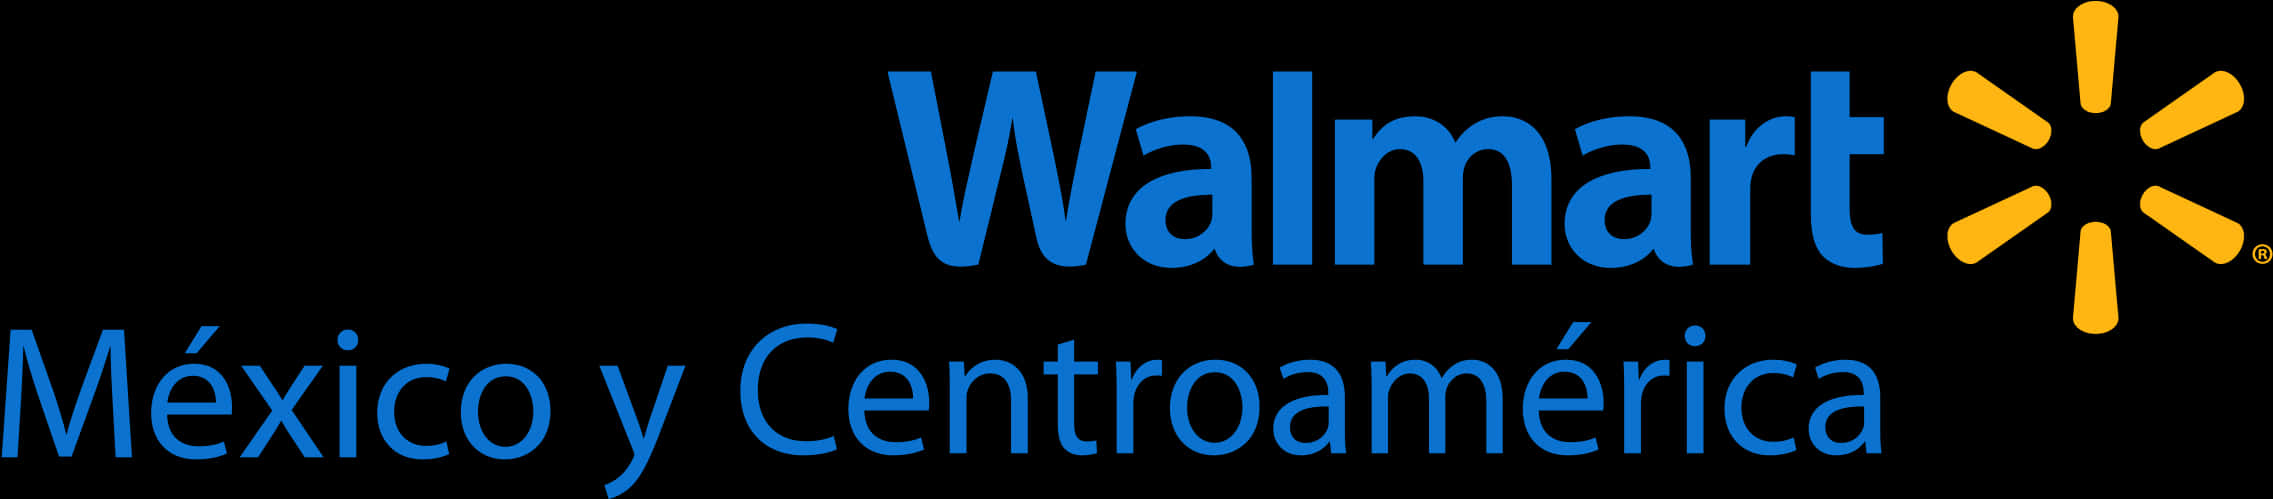 Walmart Mexico Centroamerica Logo PNG image